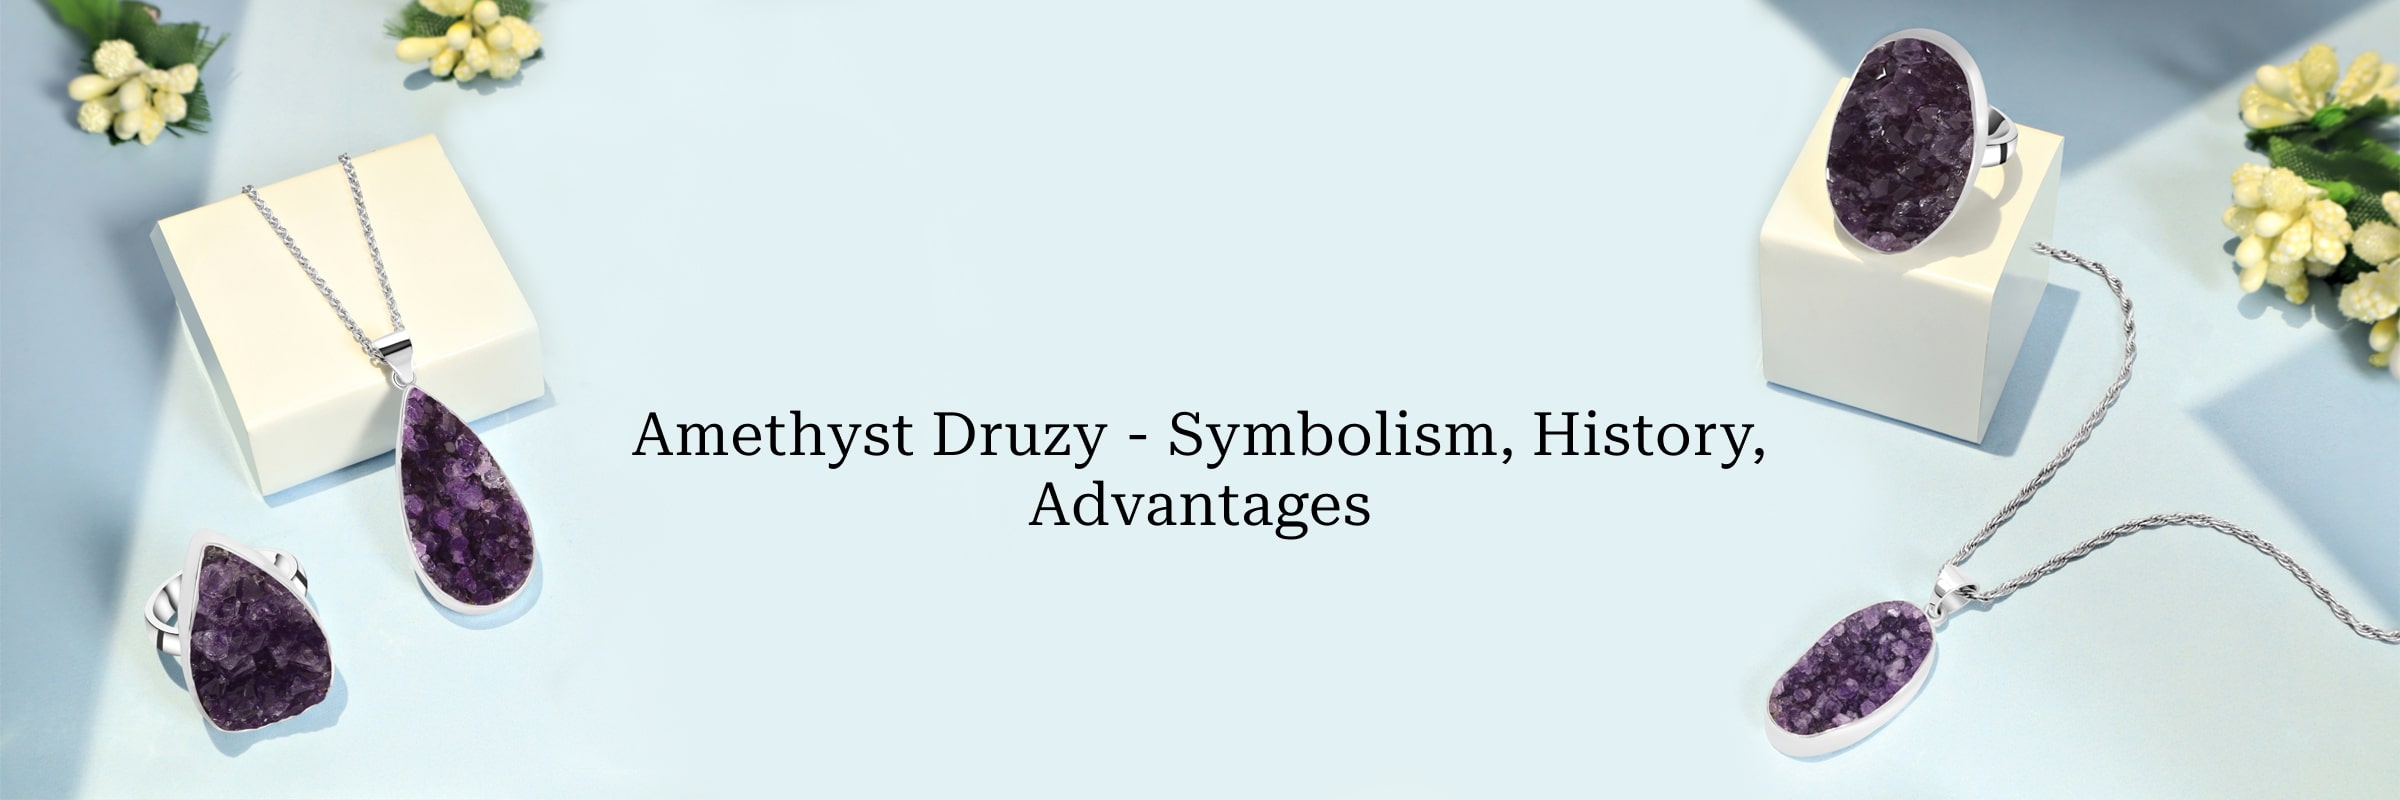 Amethyst Druzy Jewelry - Meaning, History, Benefits, Healing Properties & Zodiac Association